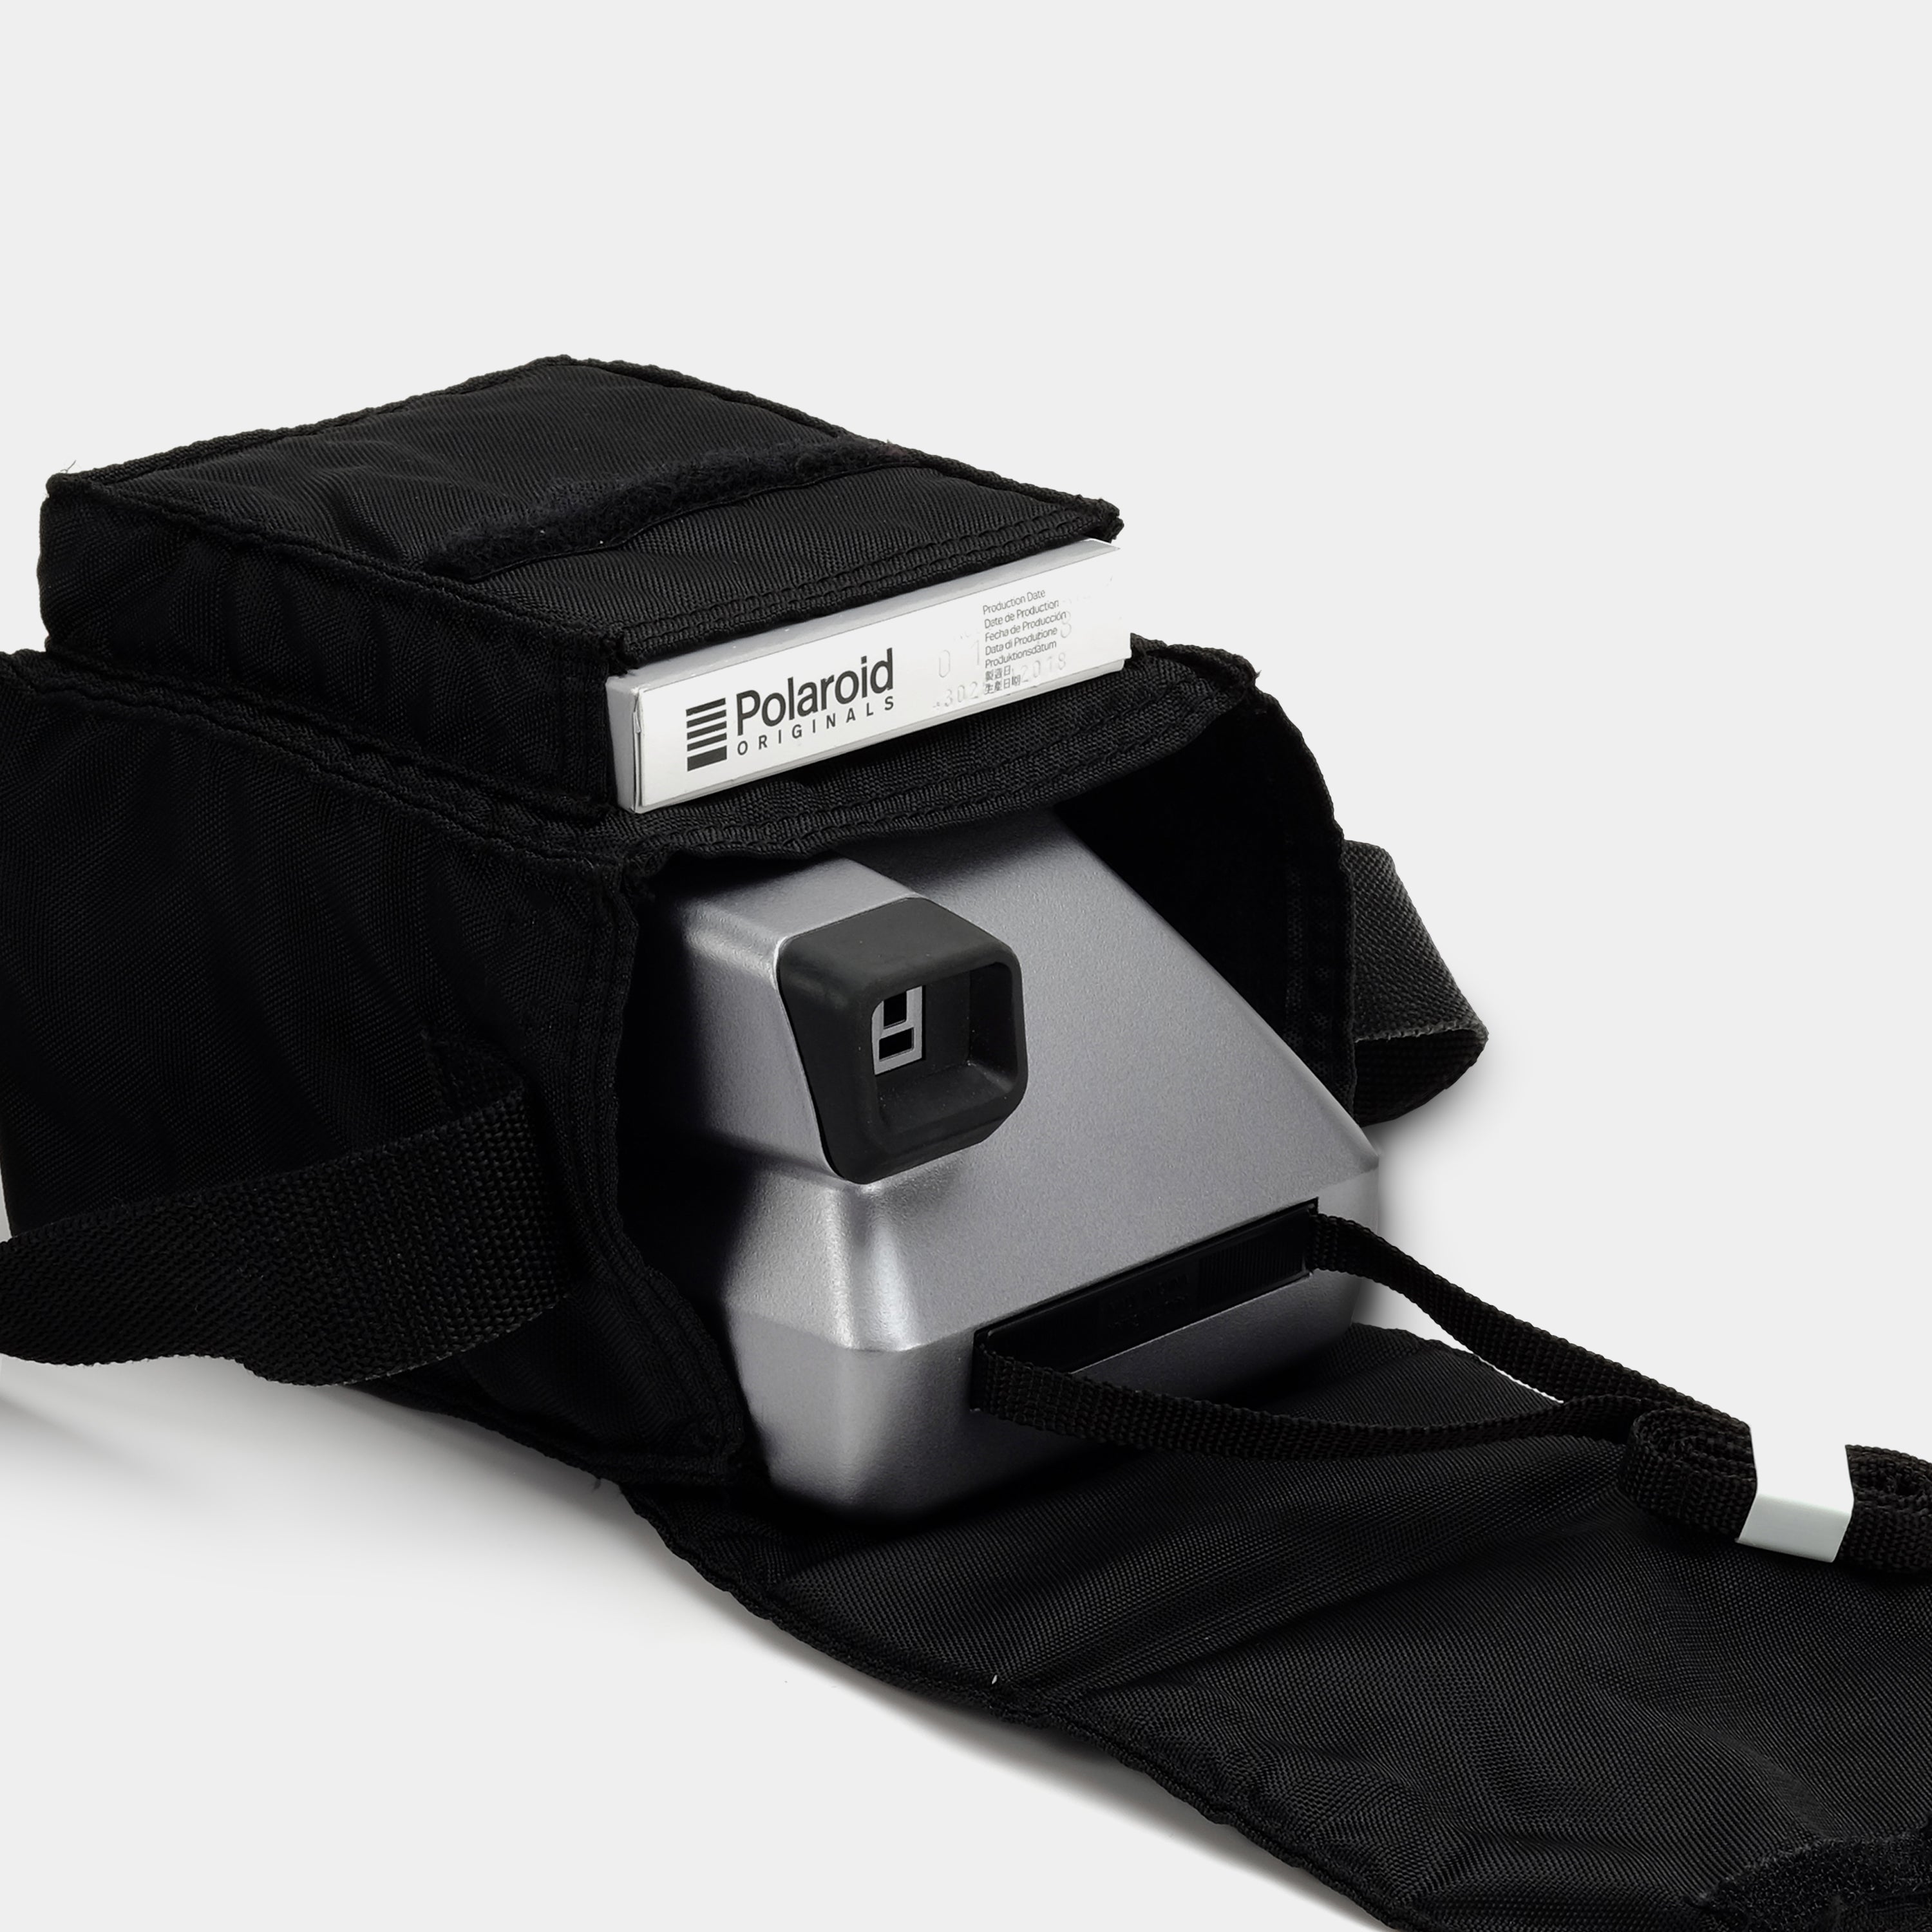 Polaroid Black Instant Camera Bag